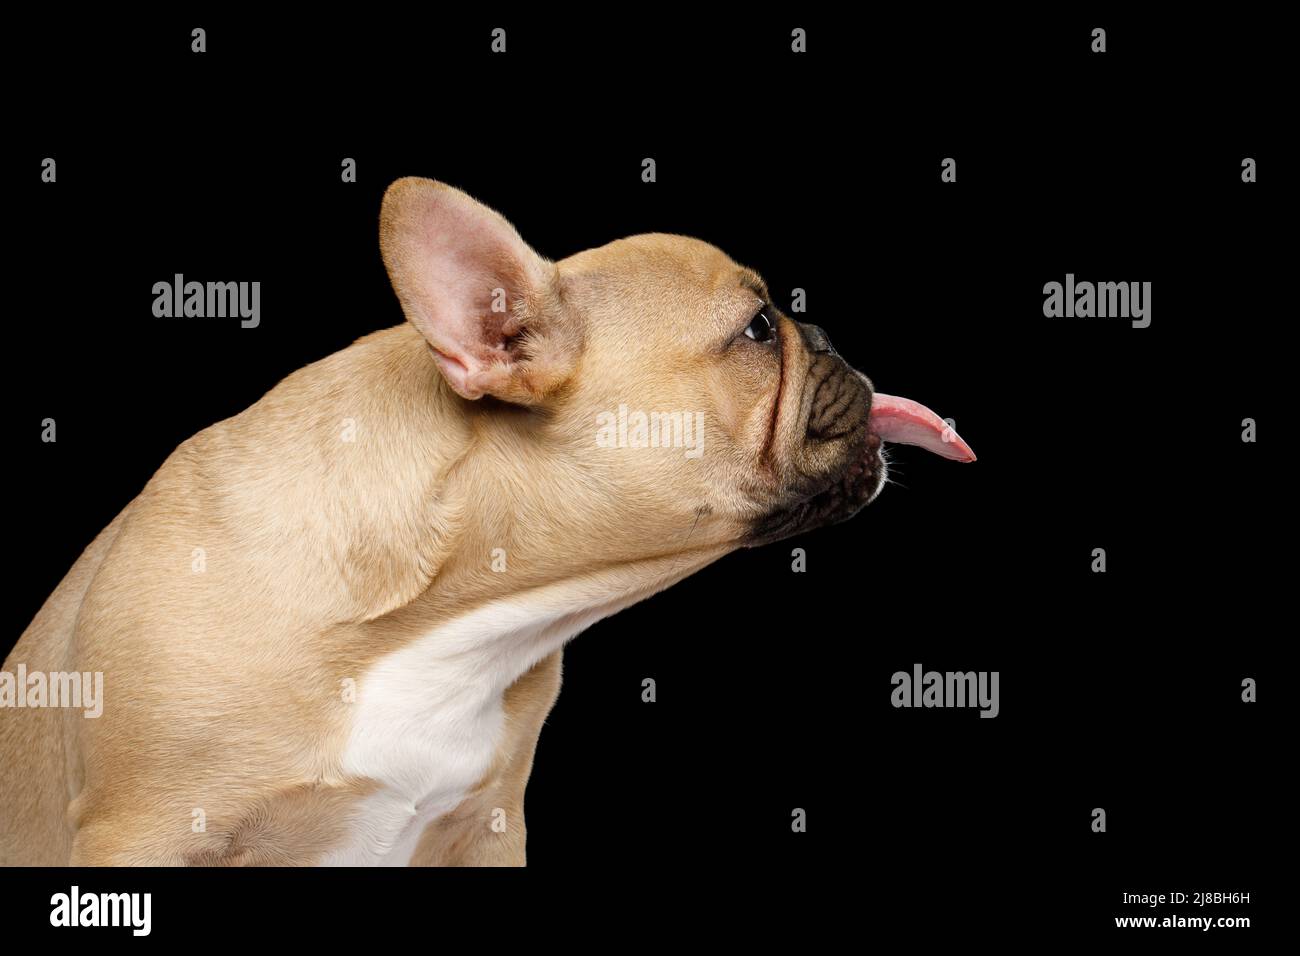 Primer plano retrato de un bulldog francés mostrando su lengua sobre fondo negro aislado, vista lateral Foto de stock